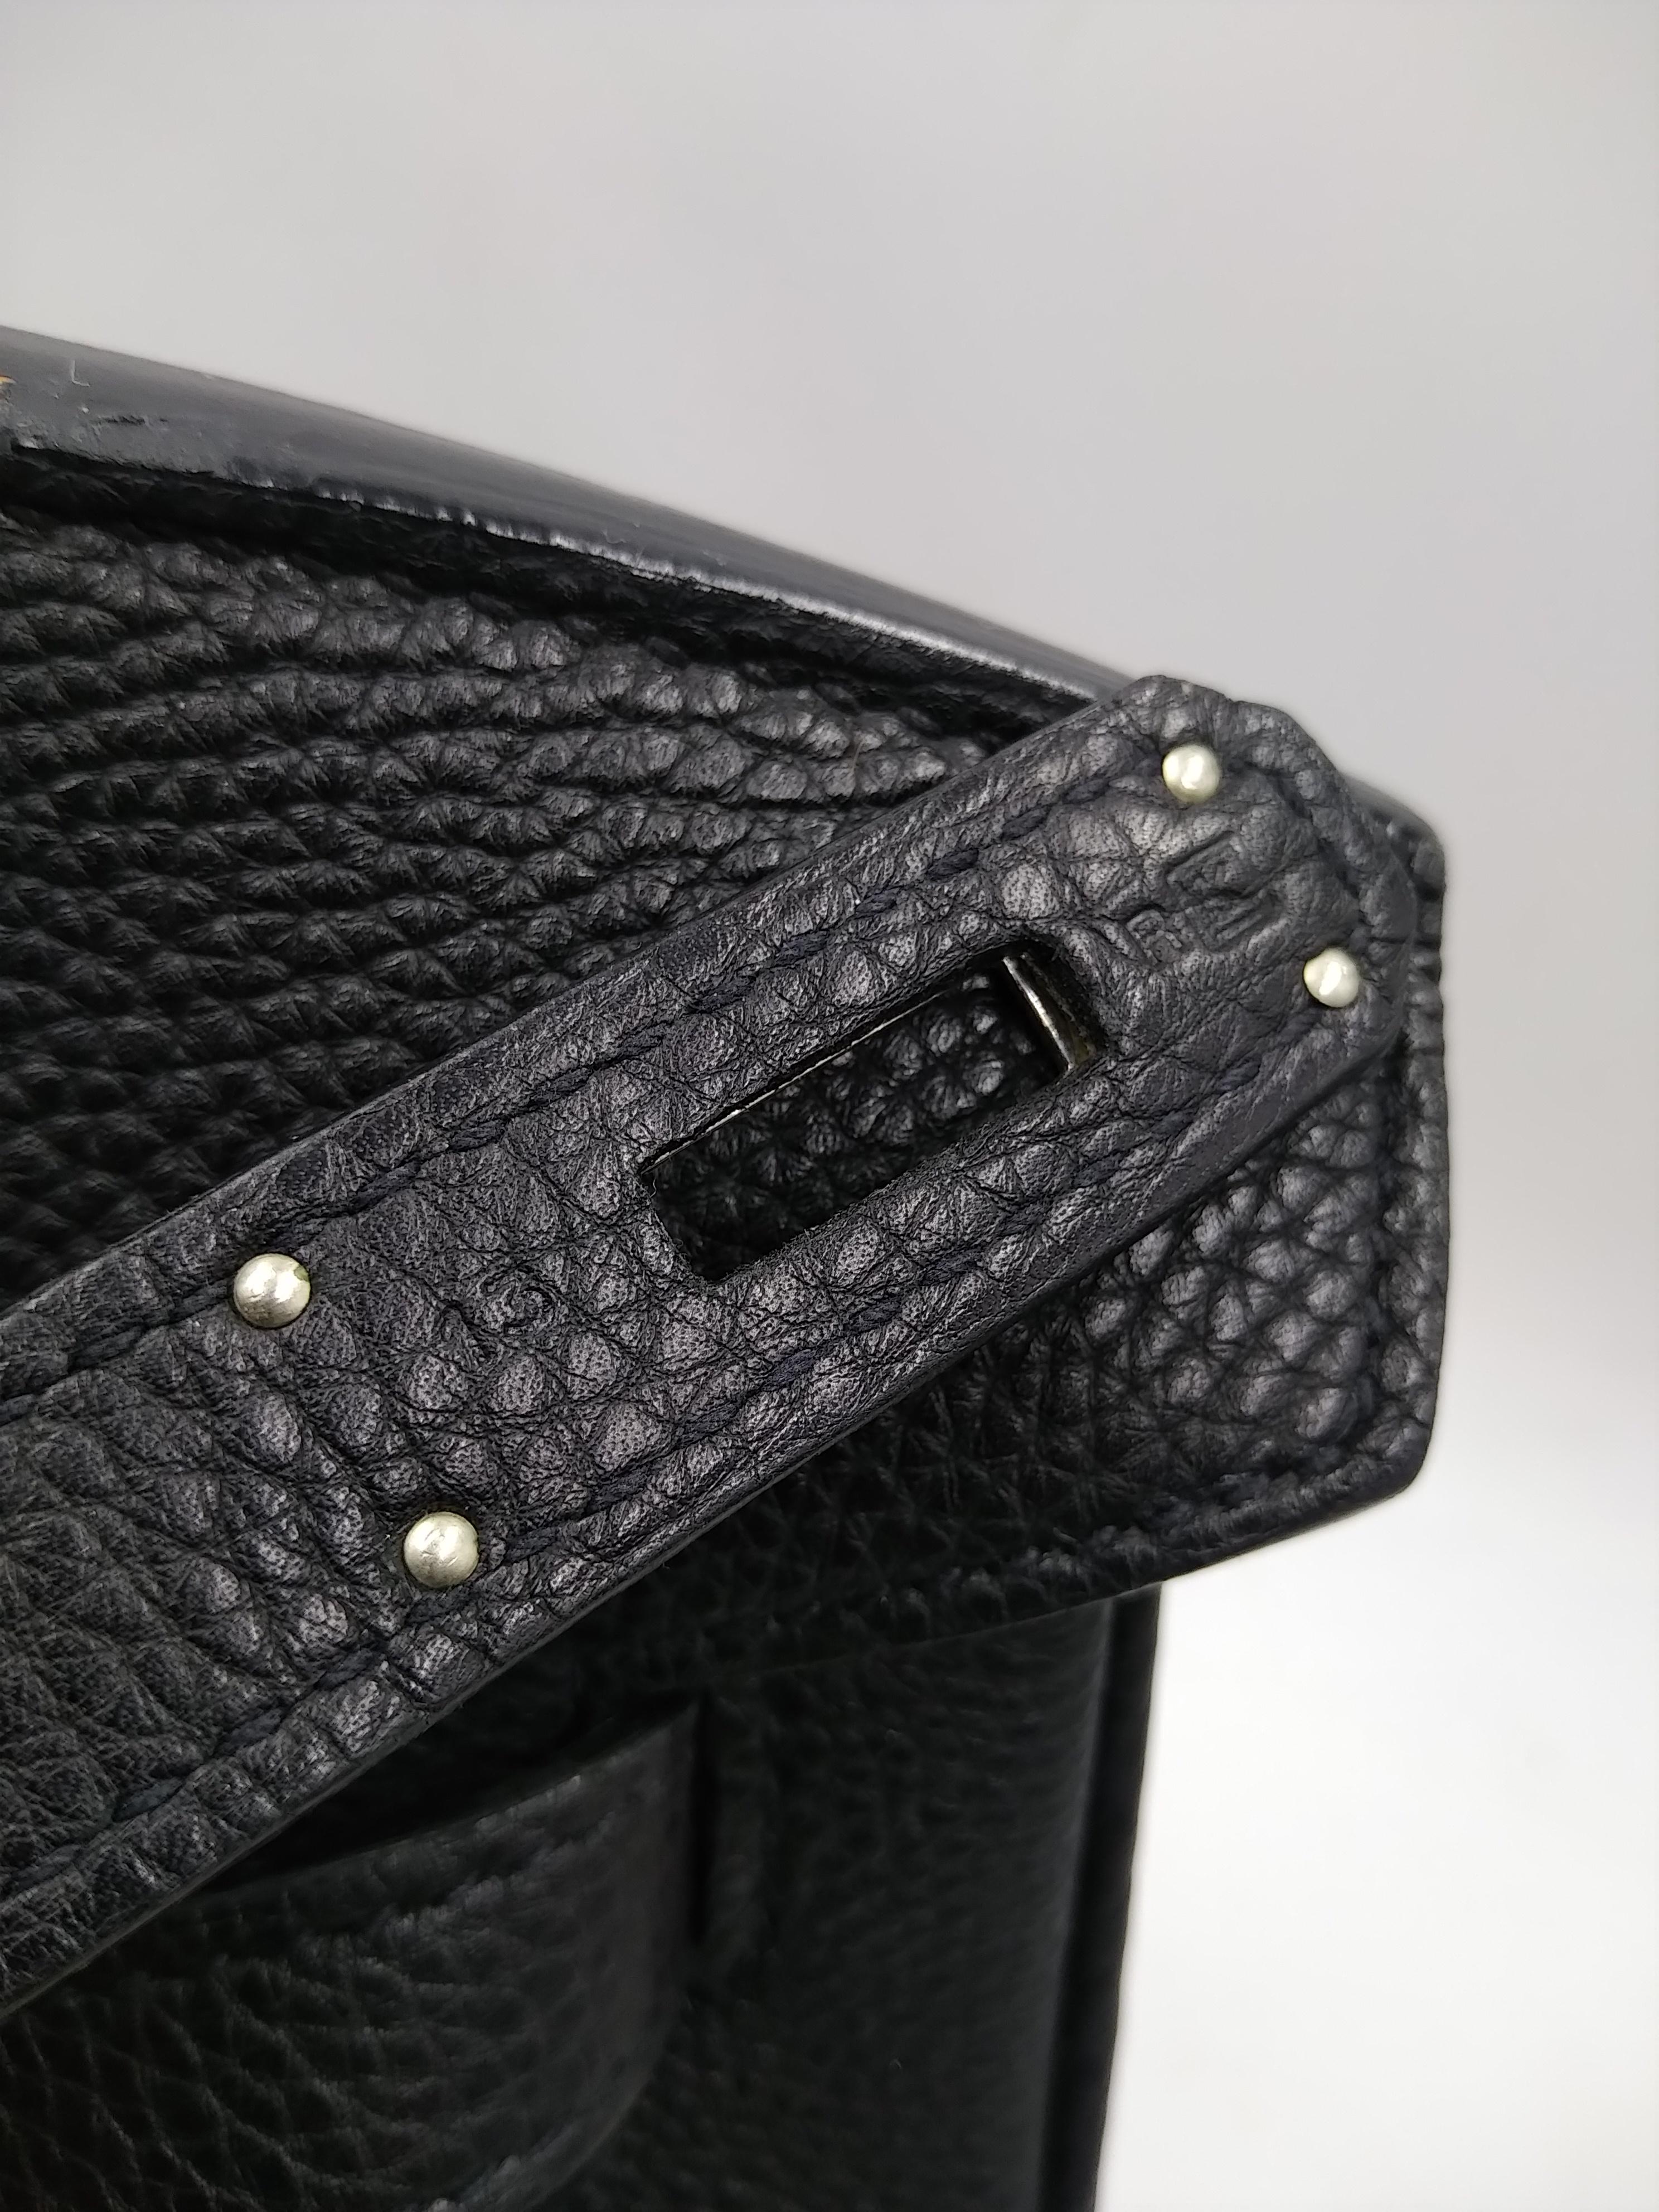 Women's or Men's Hermès 40 cm Black Togo Leather Palladium Plated Birkin Bag